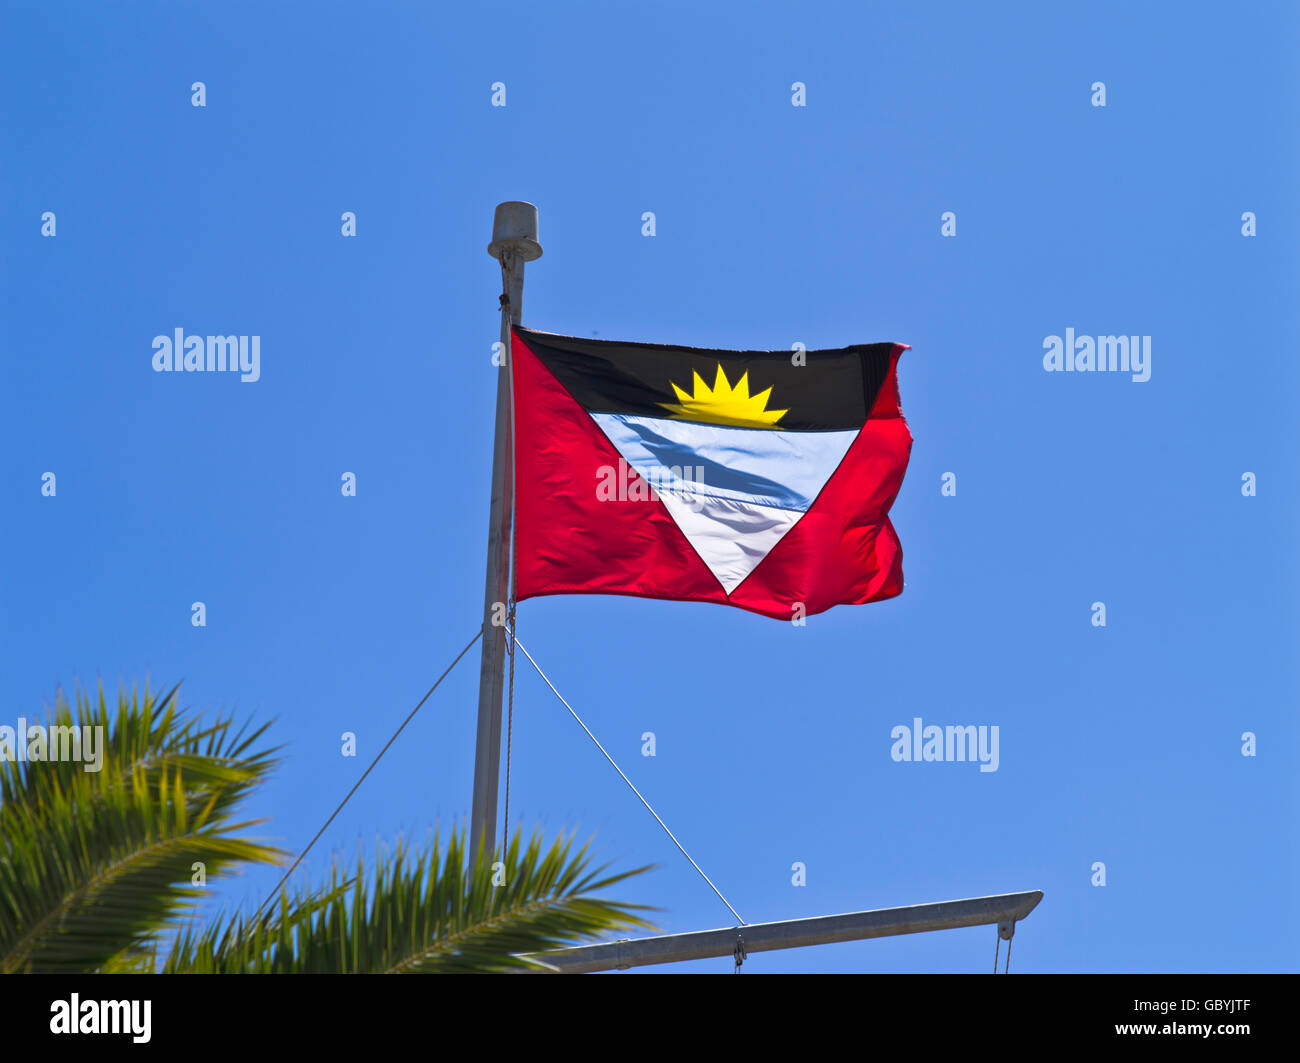 dh Antigua Barbuda Flagge ANTIGUA CARIBBEAN National Flagge von Antigua und Barbuda Stockfoto